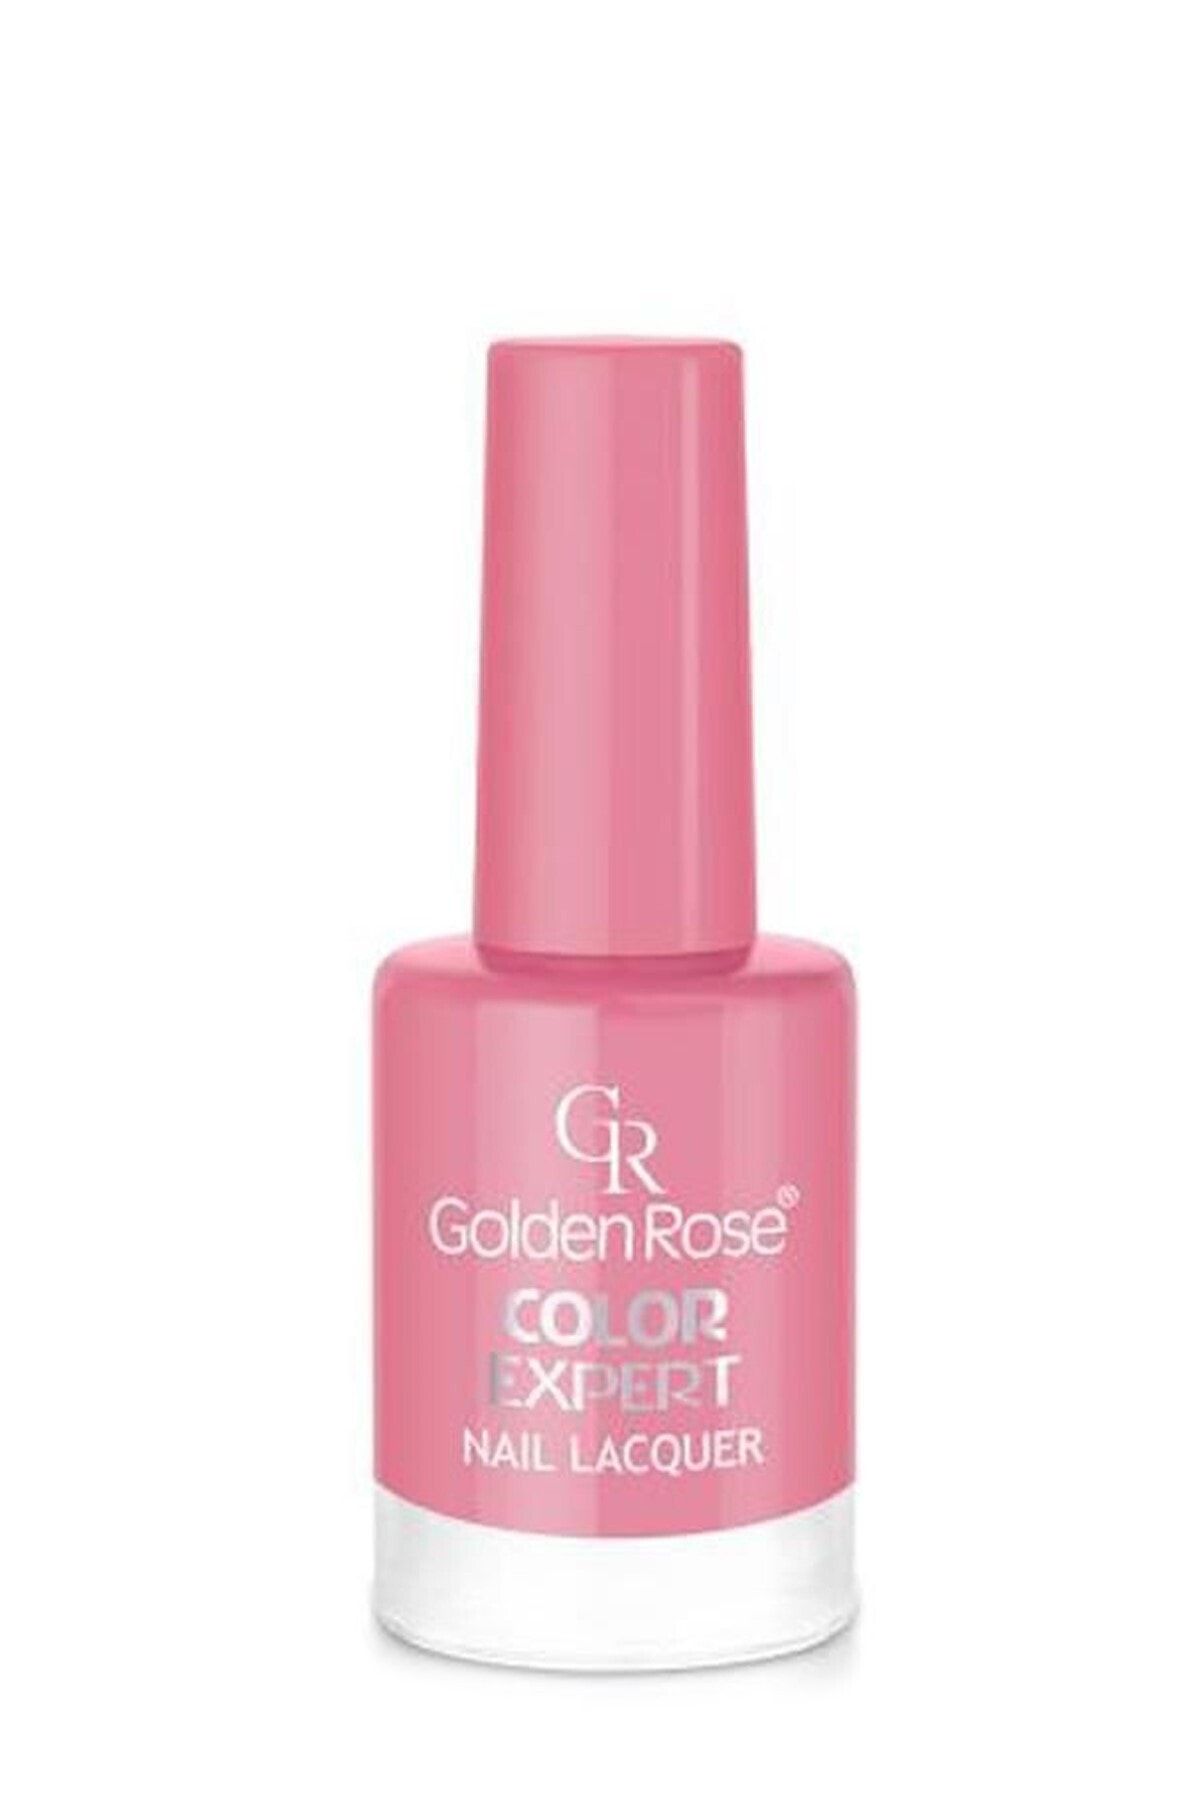 Golden Rose Oje - Color Expert Nail Lacquer No: 14 8691190703141